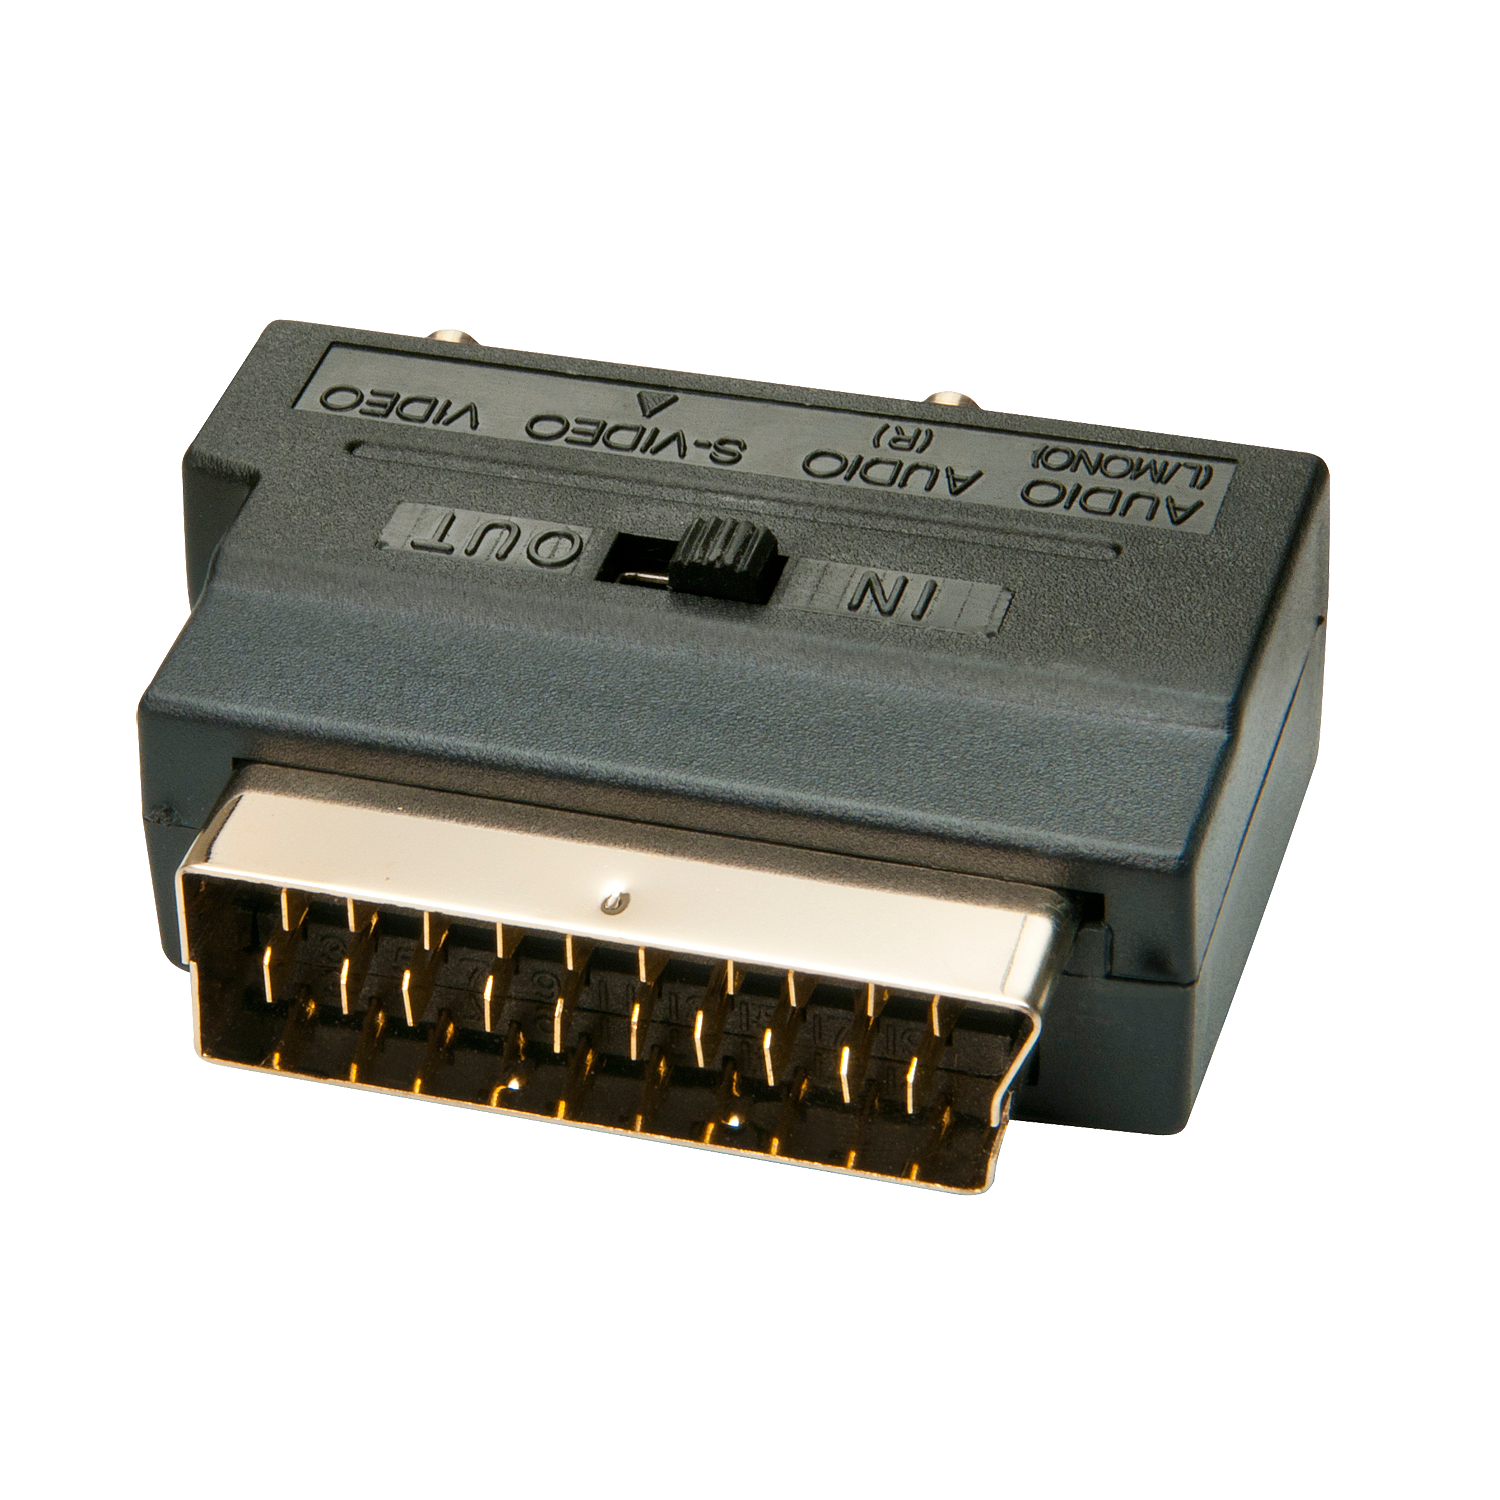 Lindy Scart Adapter, S-VHS, S-Video, CV (3x RCA) mit Umschalter für Line-In/Line-Out SCART-/S-VHS-/AV-Adapter mit Umschalter für Line-In/Line-Out, Anschlüsse SCART 21pin-Stecker an S-VHS (Mini-DIN 4p)- und 3 x Cinch-Buchse (RCA) (35628)